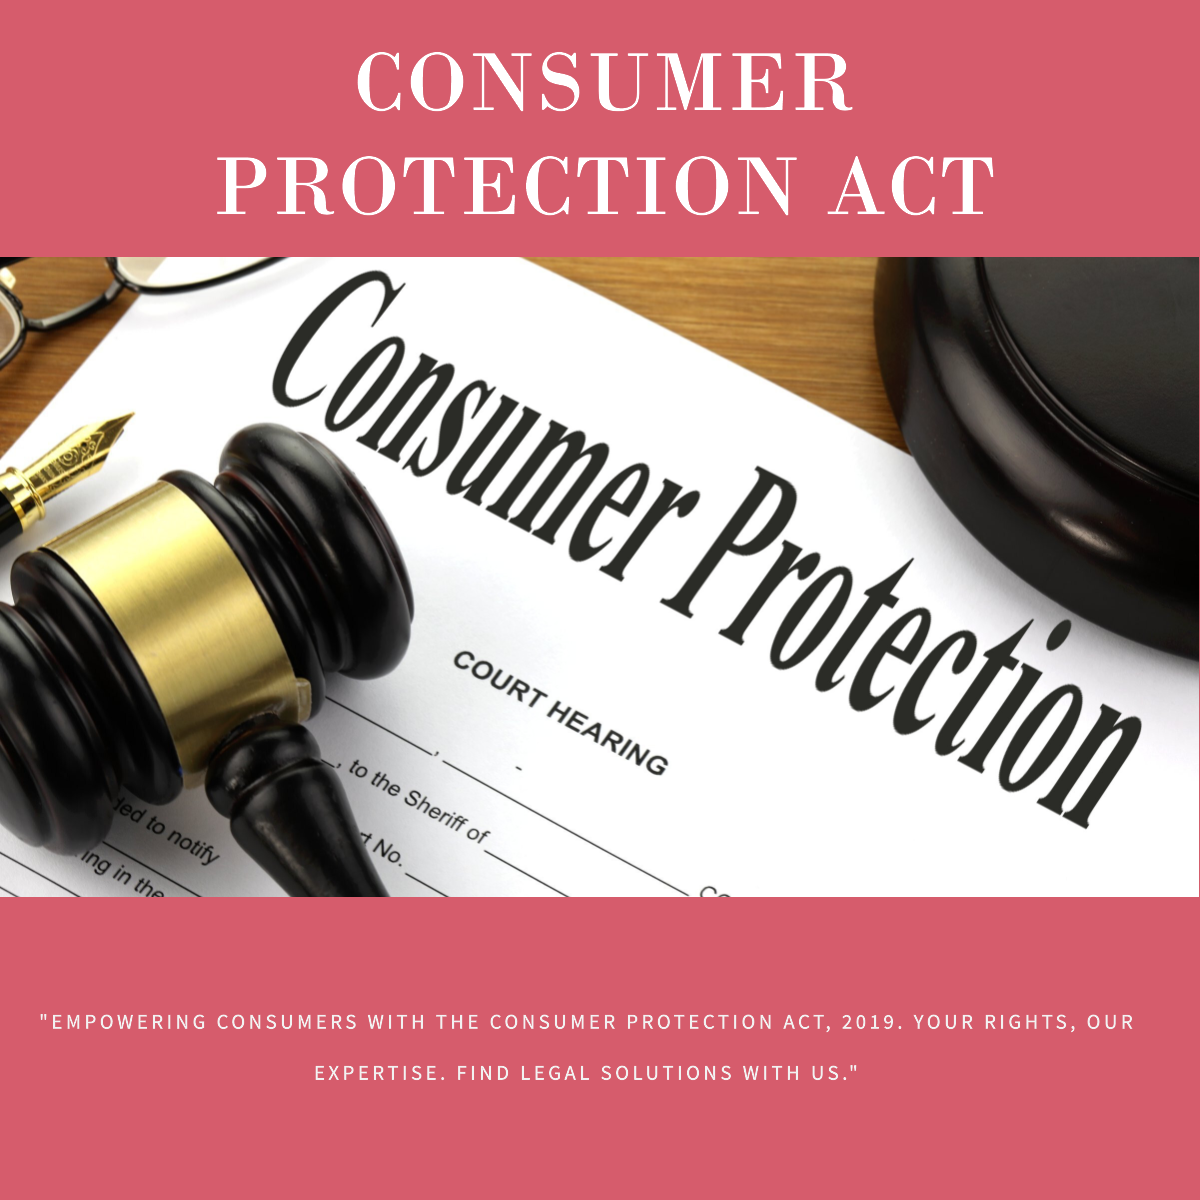 Understanding Consumer Protection Laws in Australia